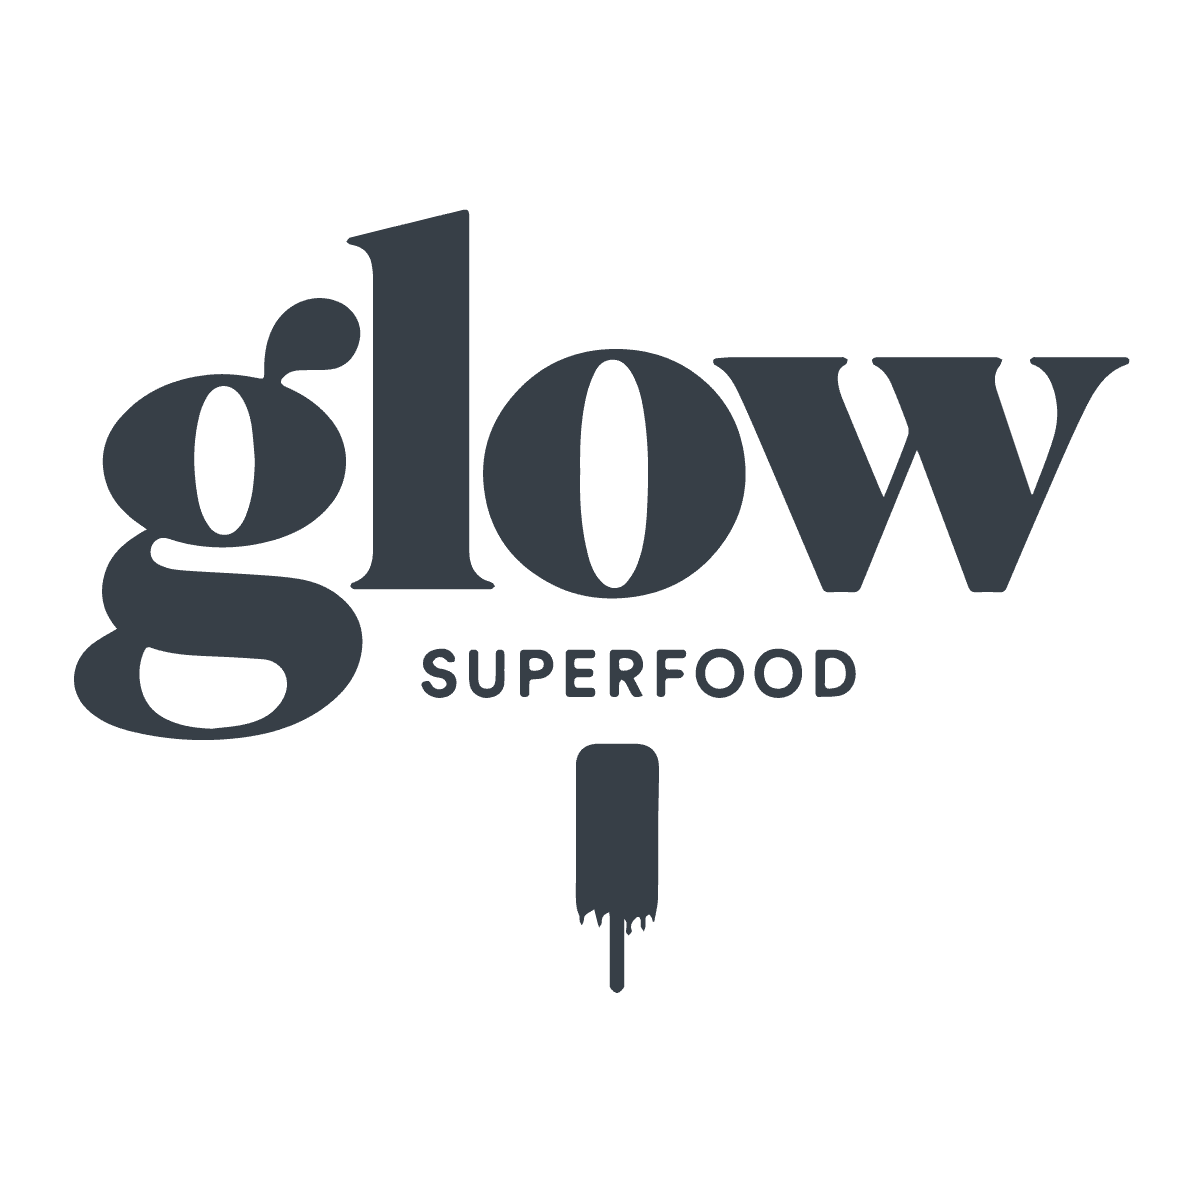 Glow Superfood logo